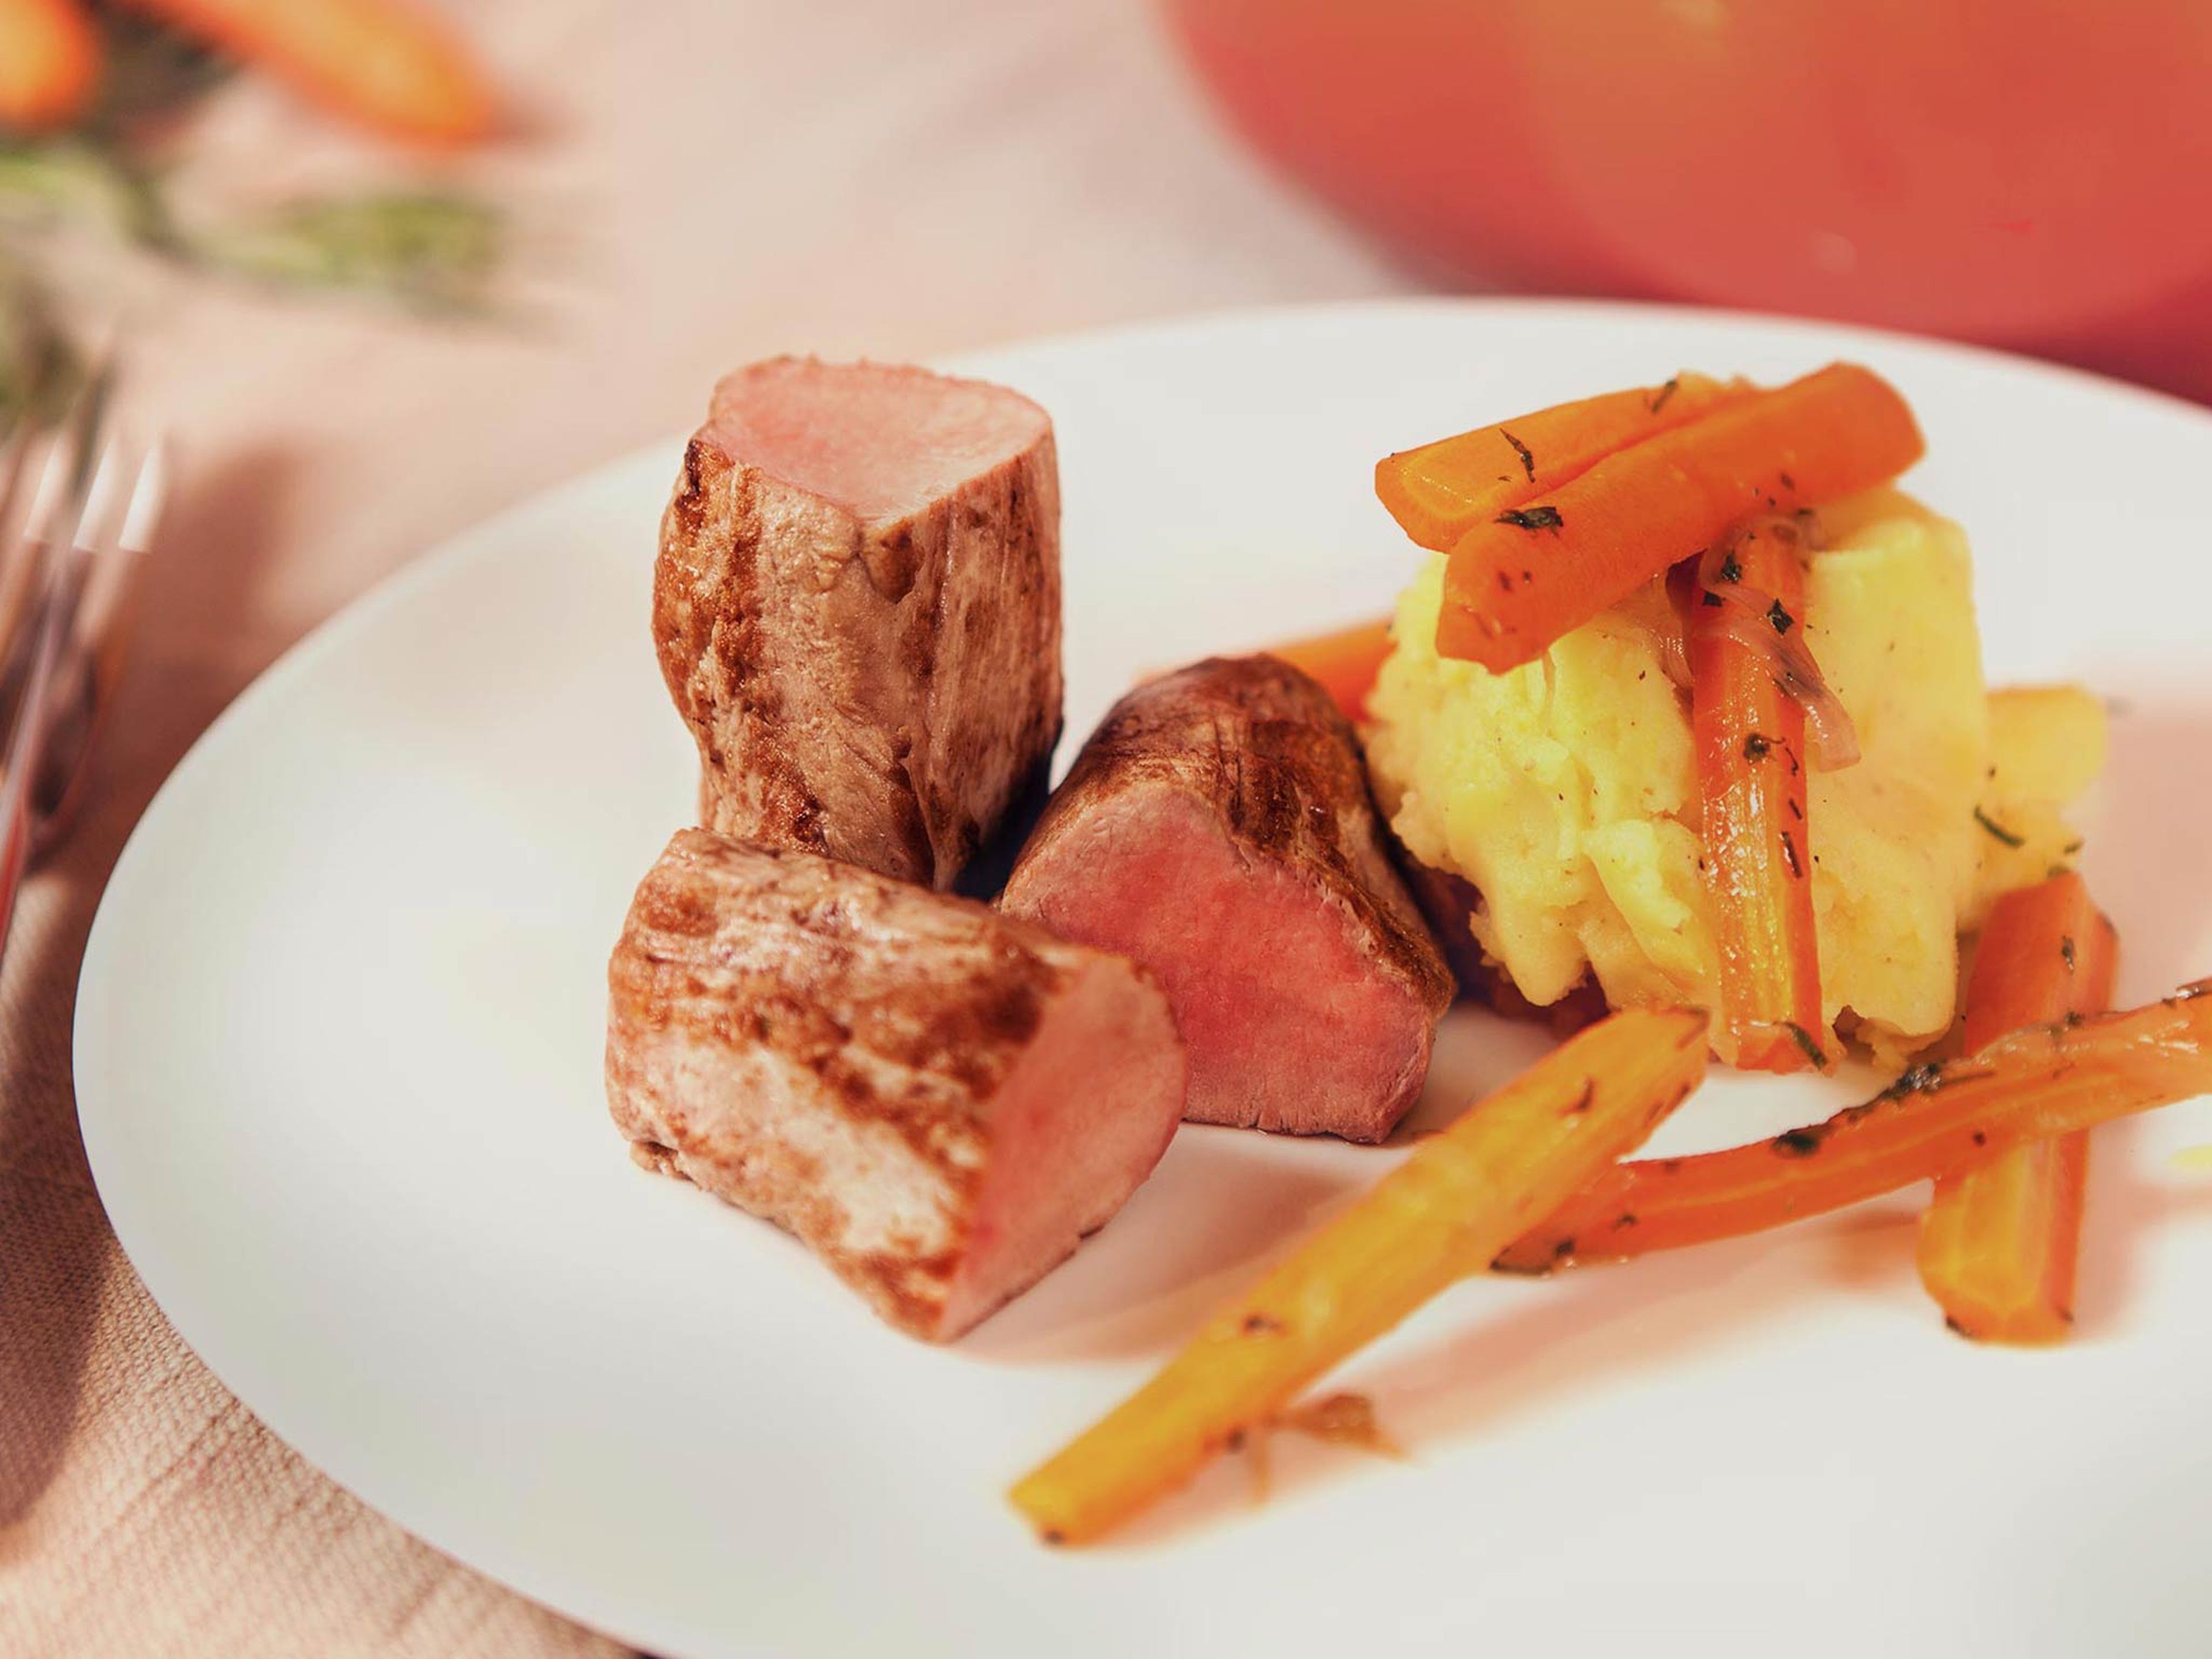 Pork tenderloin with tarragon carrots and mashed potatoes